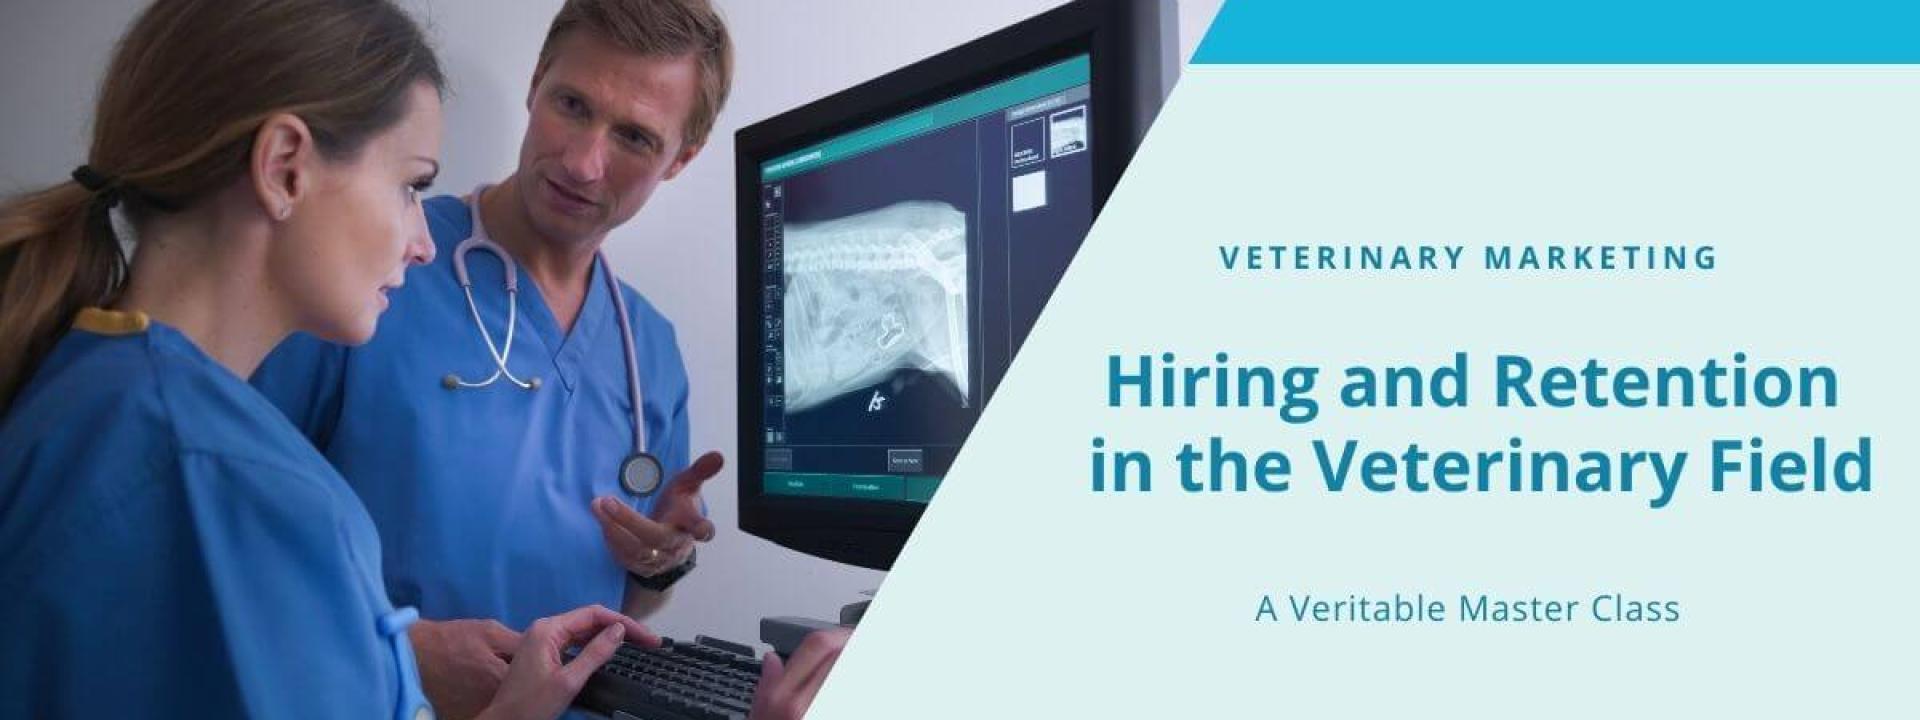 Hiring, training, and retaining quality veterinary employees